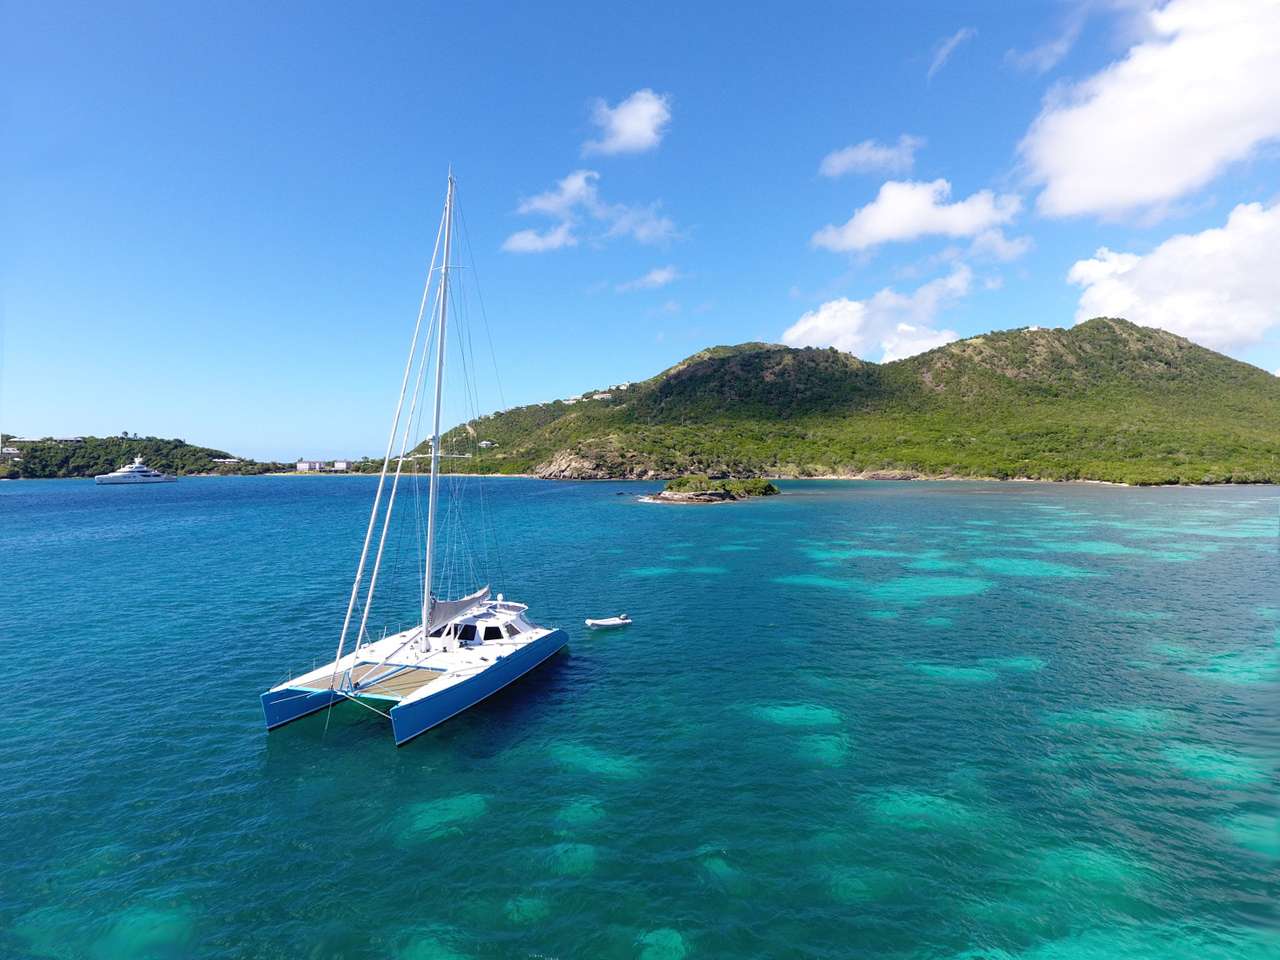 skylark - Luxury yacht charter Antigua and Barbuda & Boat hire in Caribbean 1